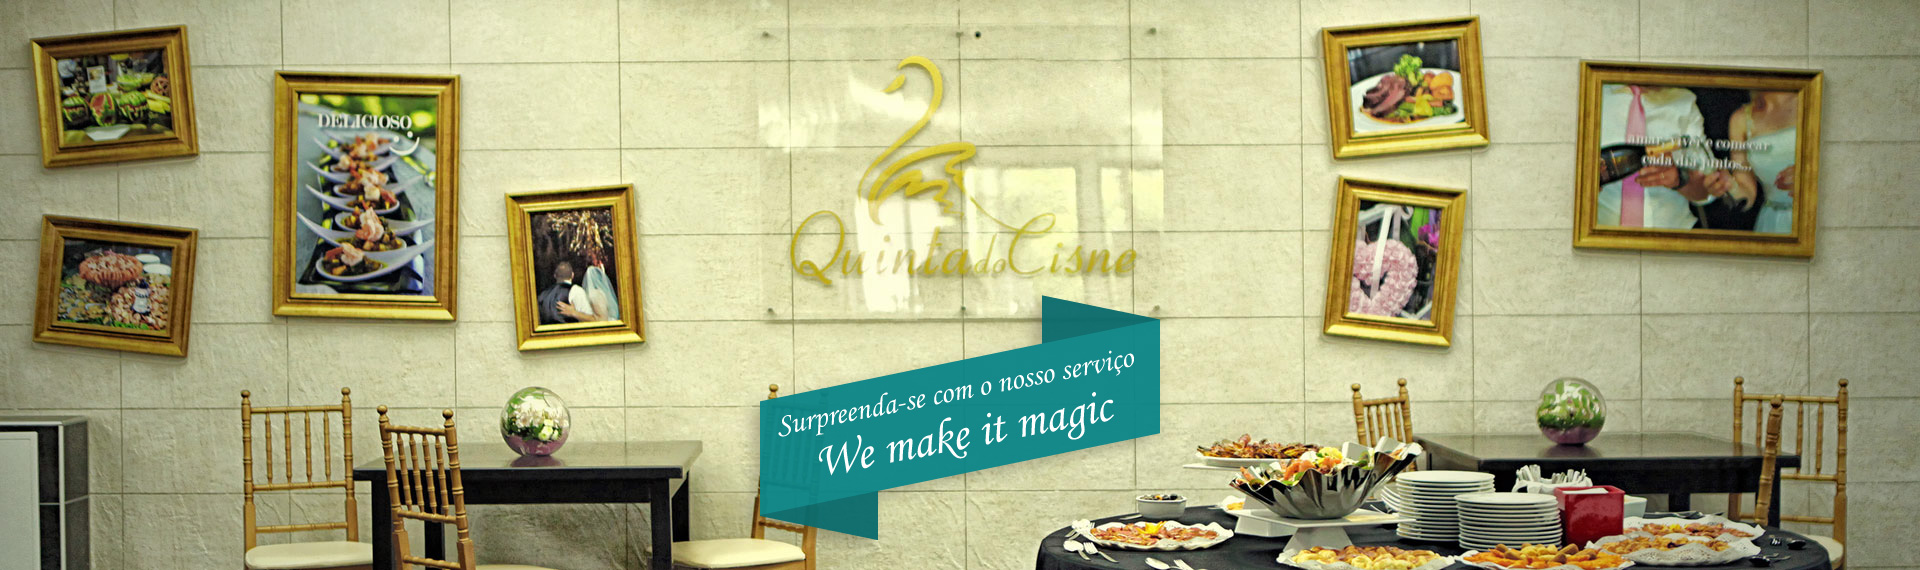 We make it magic | Quinta do Cisne